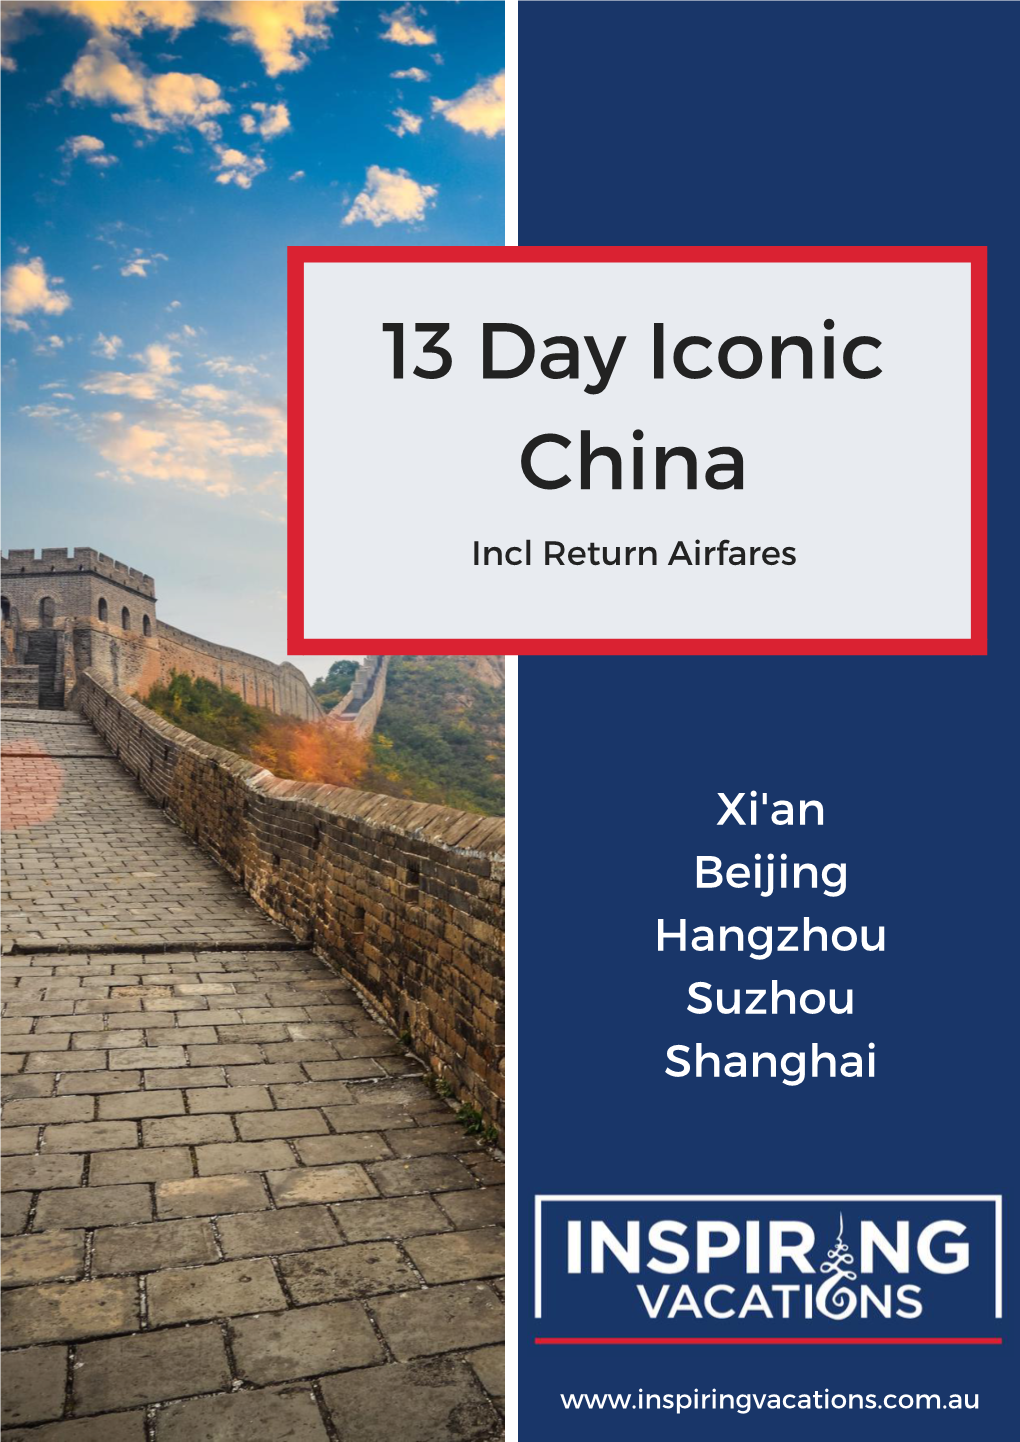 13 Day Iconic China